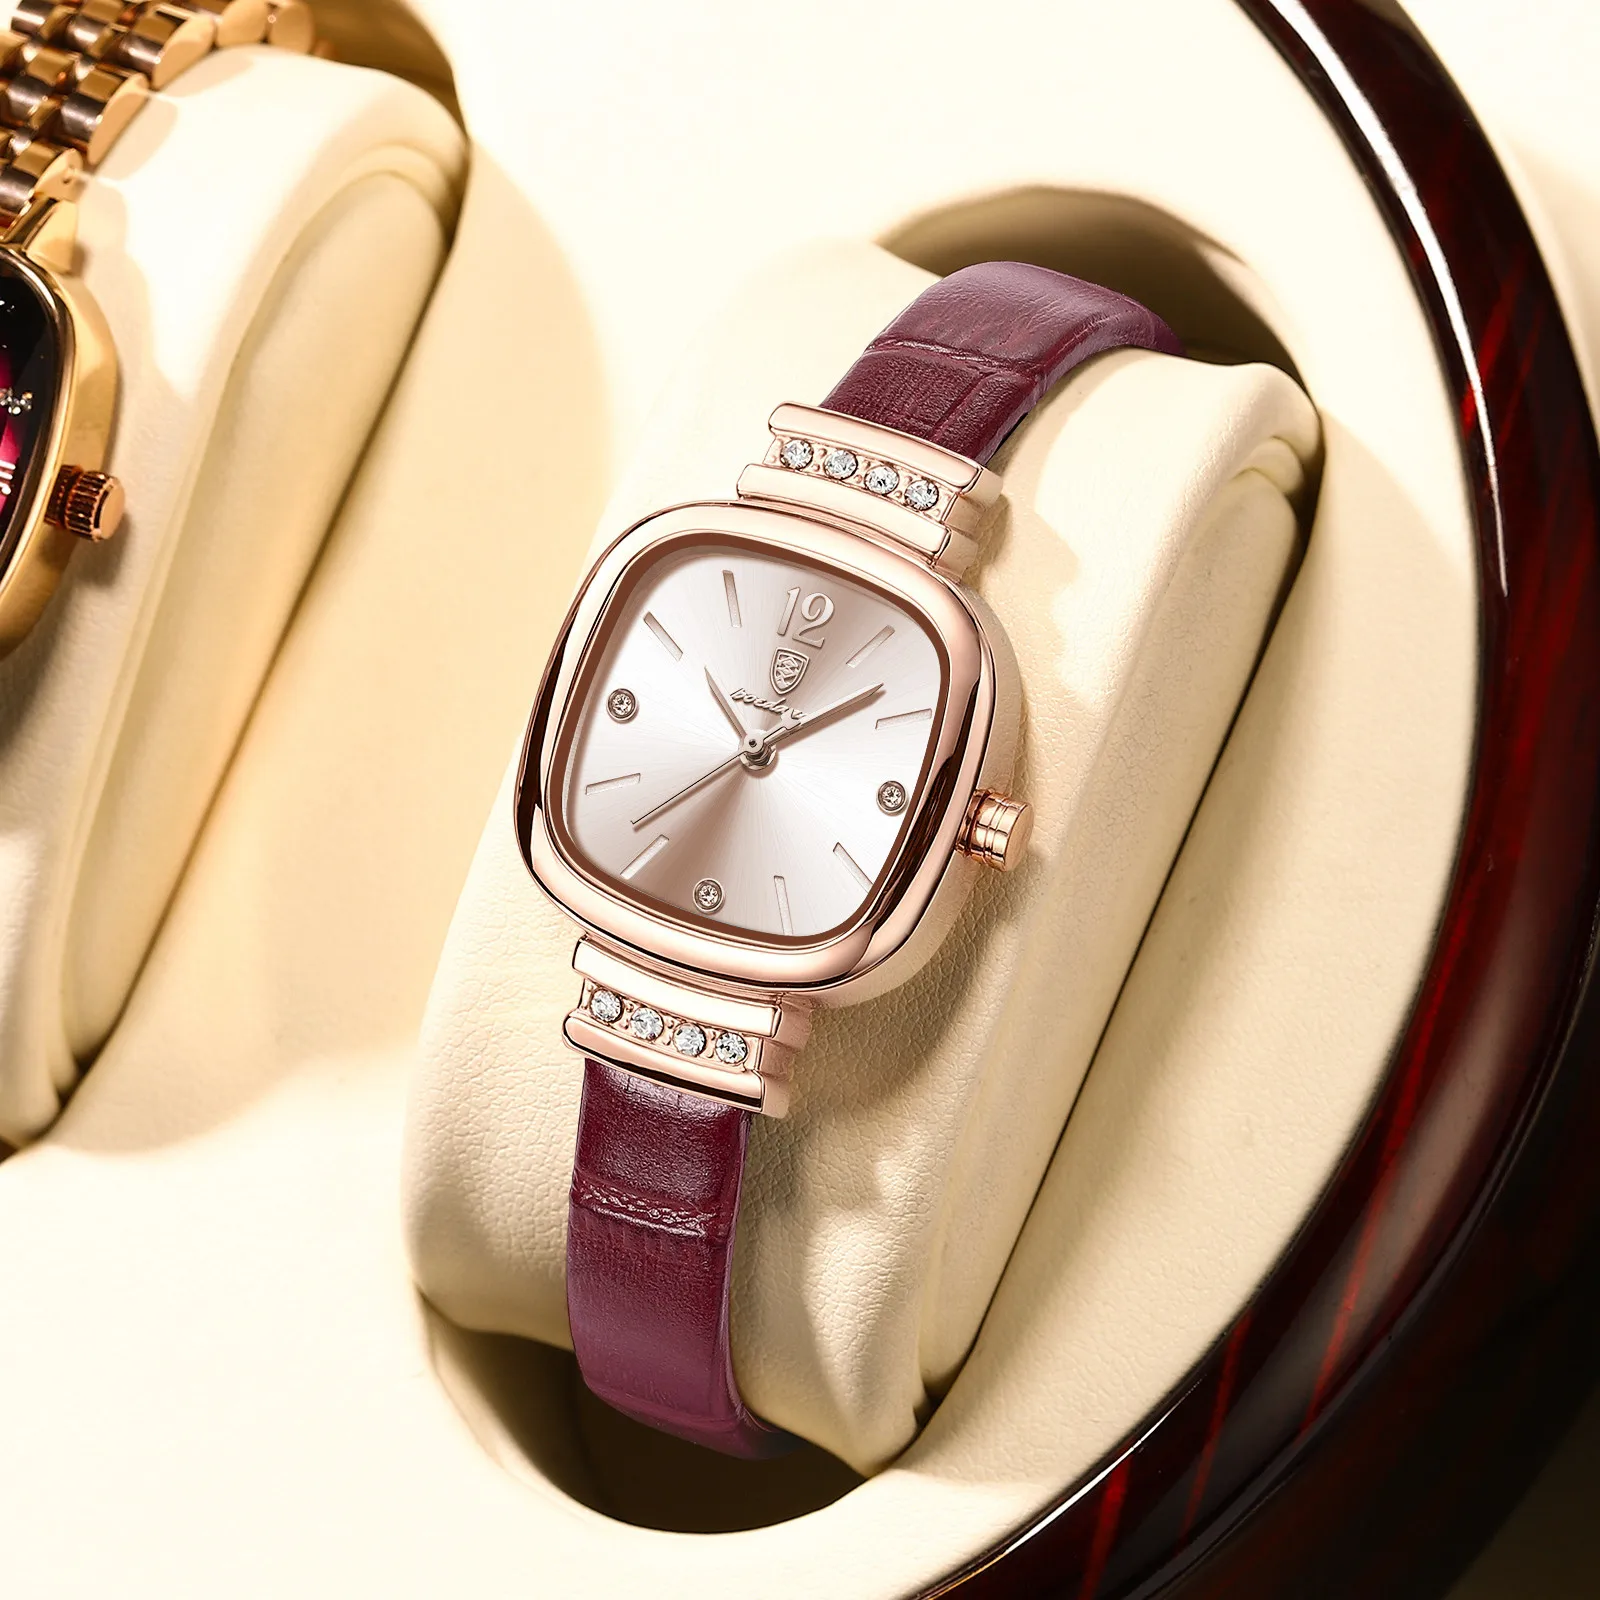 POEDAGAR Women's Watches Fashion Square Diamond Leather Waterproof Quartz Watch for Women Luxury Wristwatch Girlfriend Gift enlarge